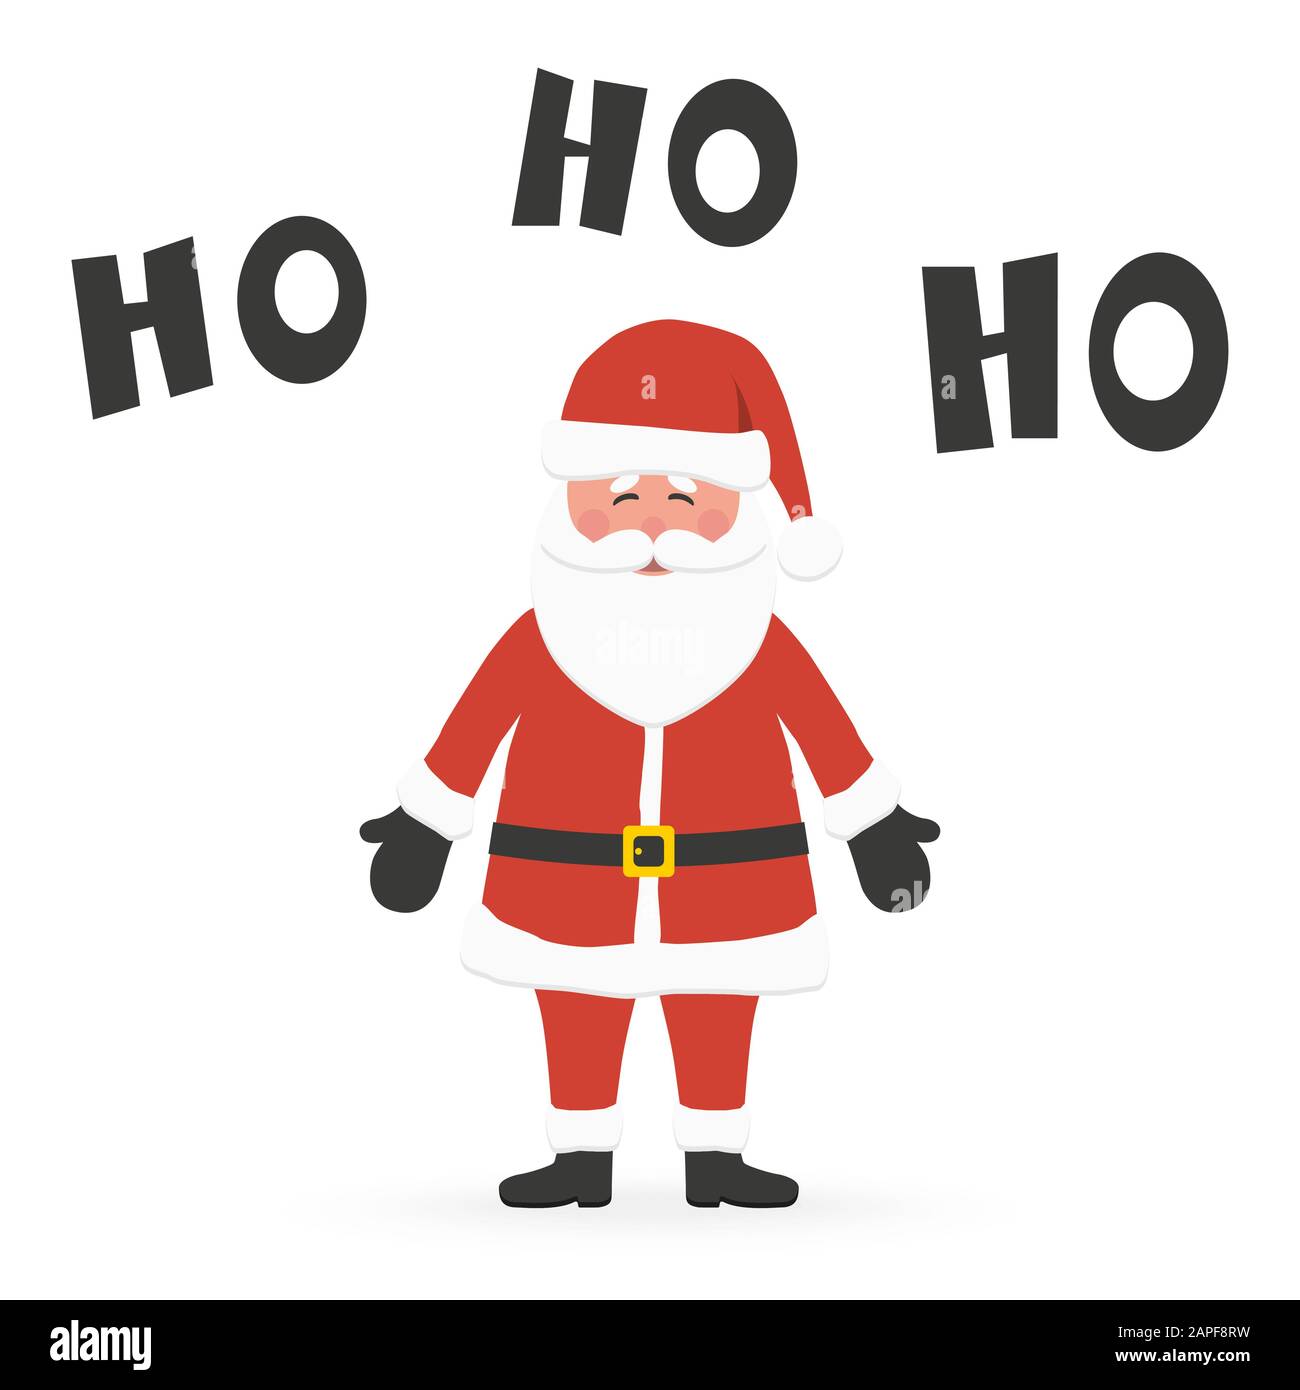 https://c8.alamy.com/comp/2APF8RW/santa-claus-concept-with-santa-saying-ho-ho-ho-isolated-on-white-background-for-christmas-time-greetings-2APF8RW.jpg